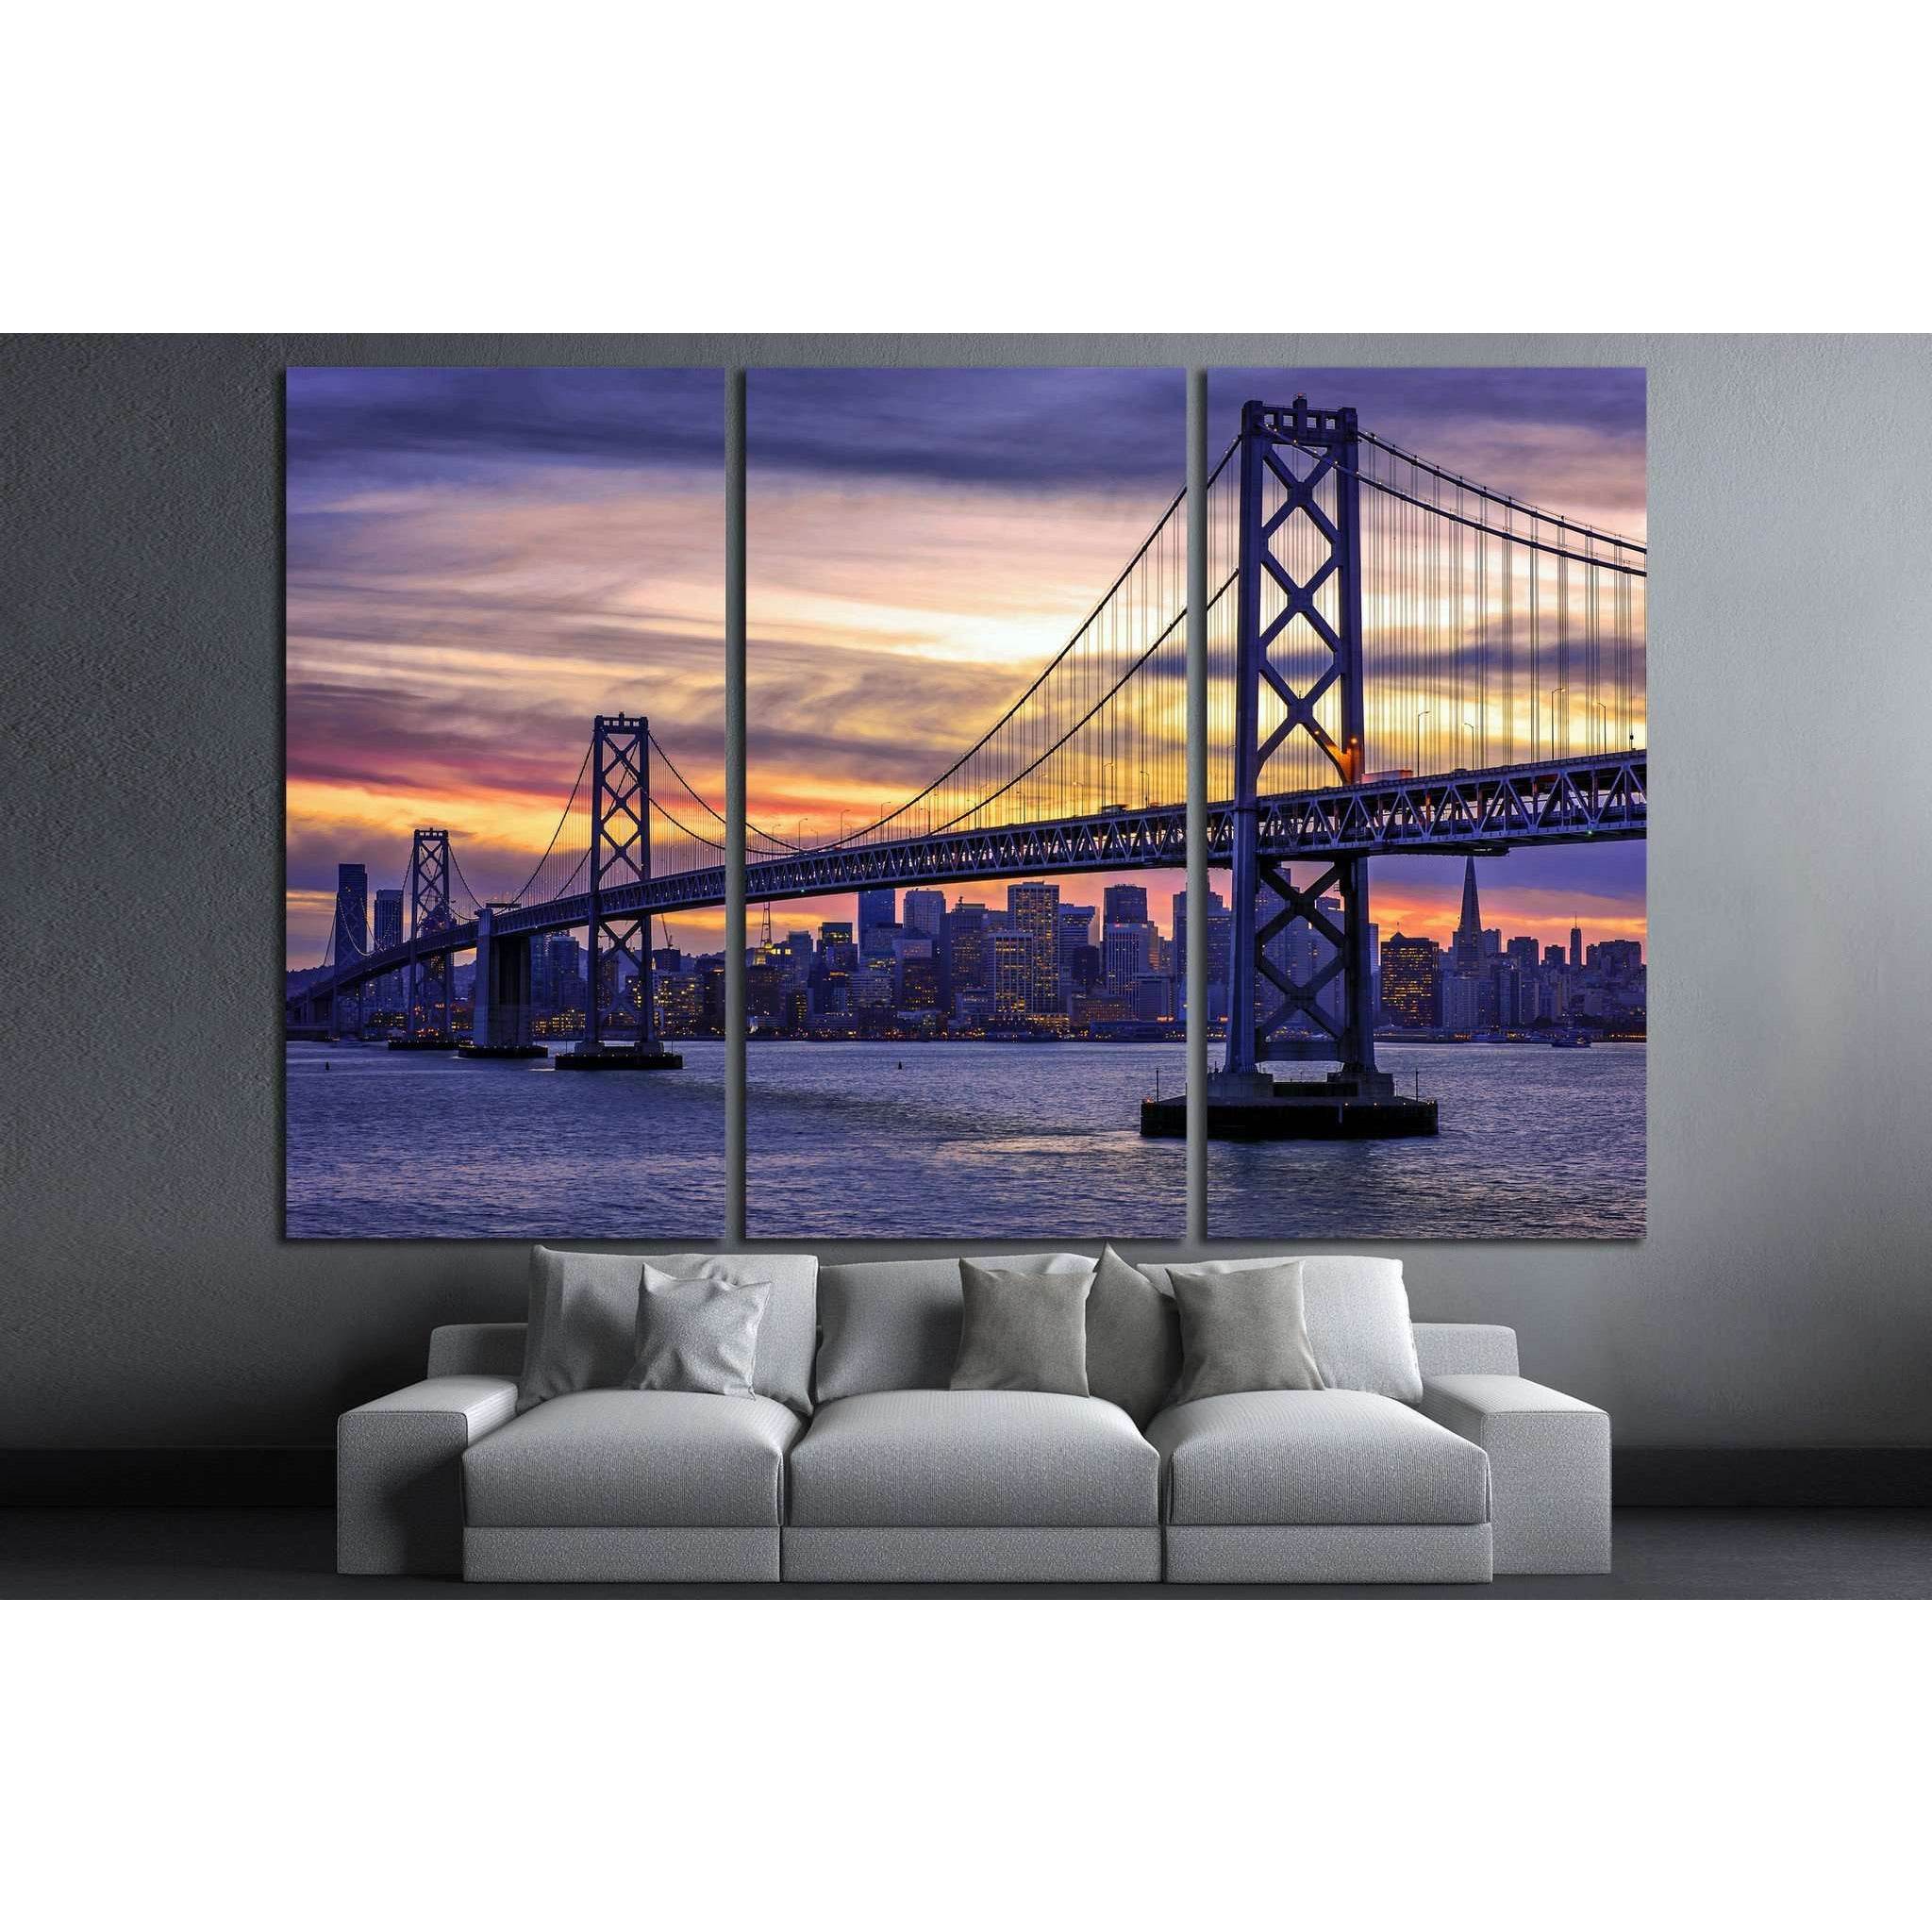 Golden Gate Bridge №1110 Ready to Hang Canvas Print